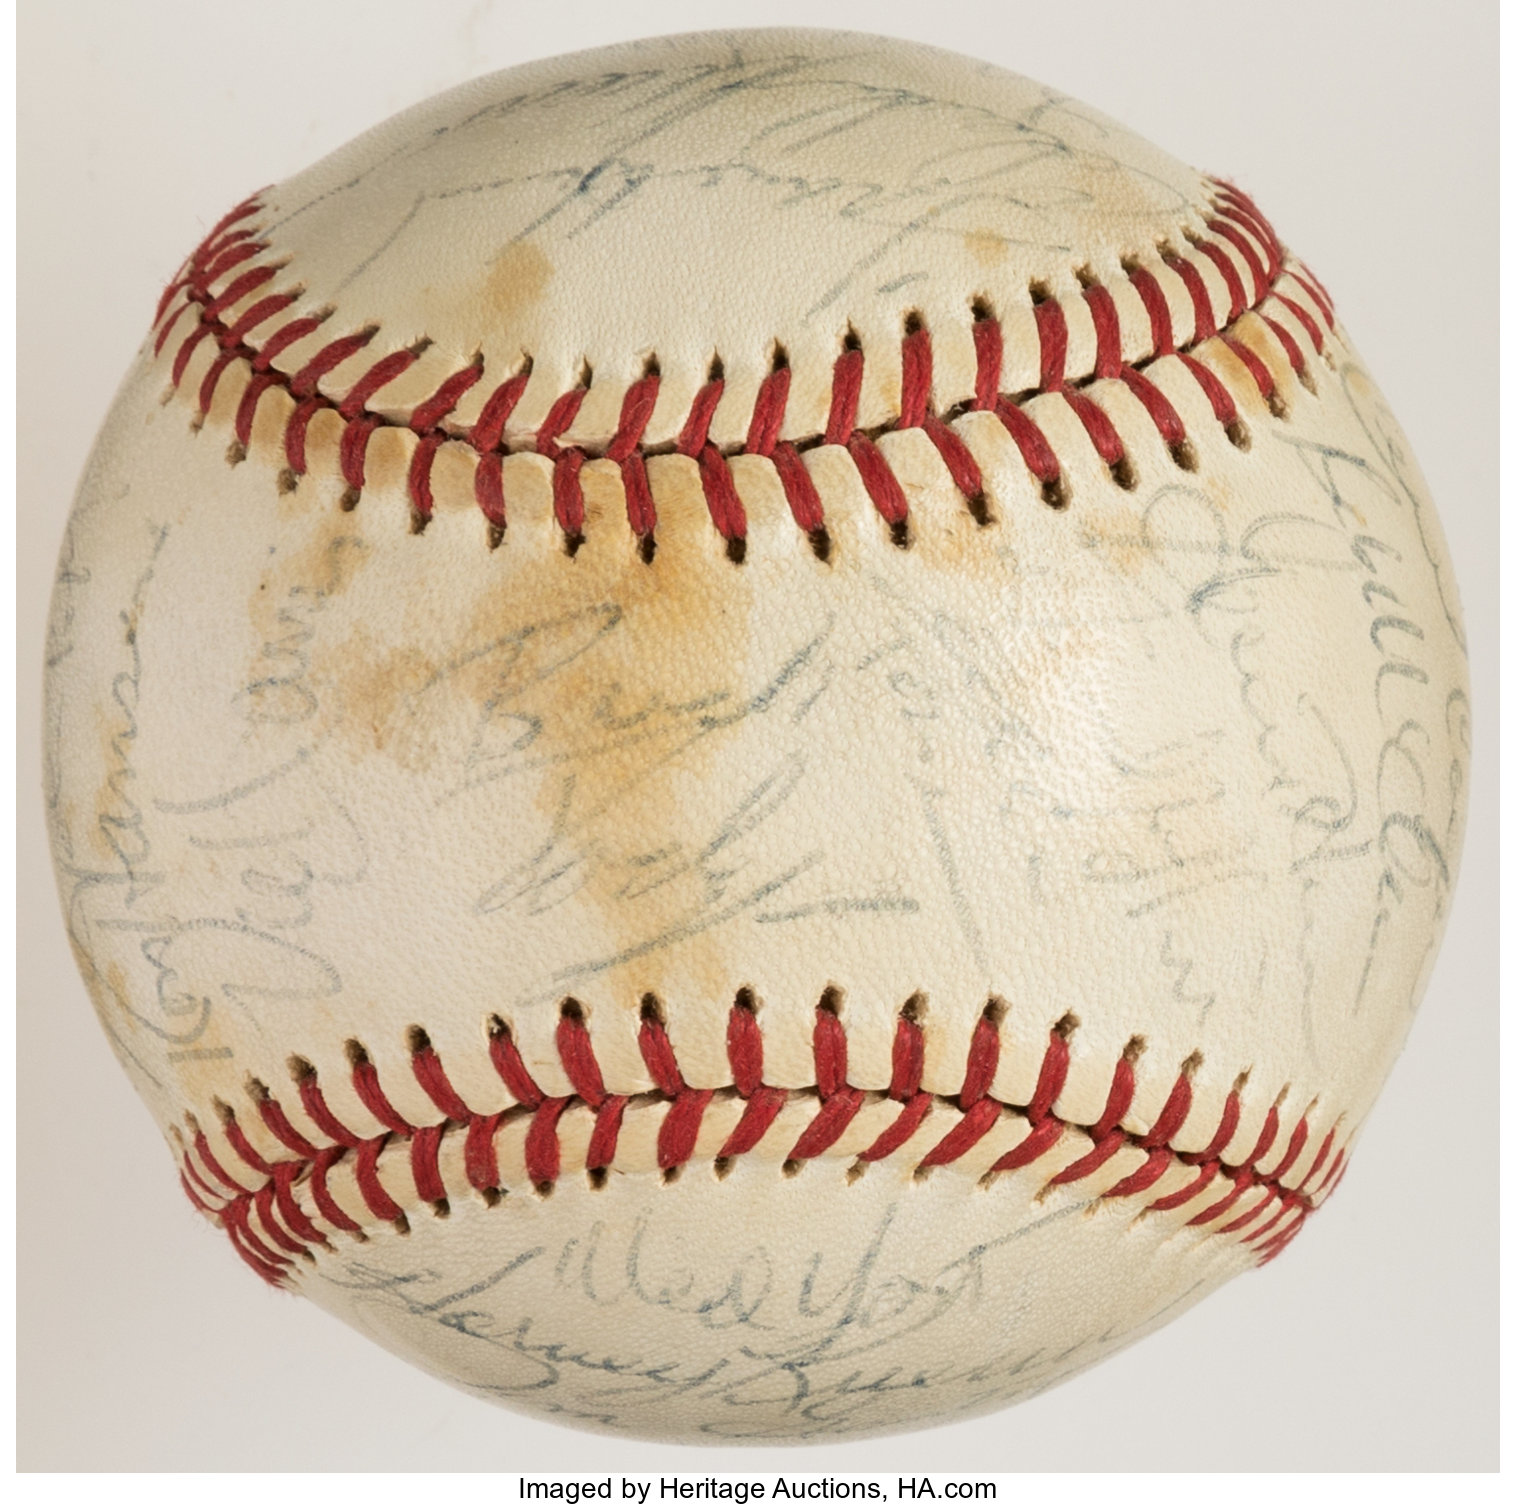 Ben Oglivie autographed Baseball Card (Milwaukee Brewers)